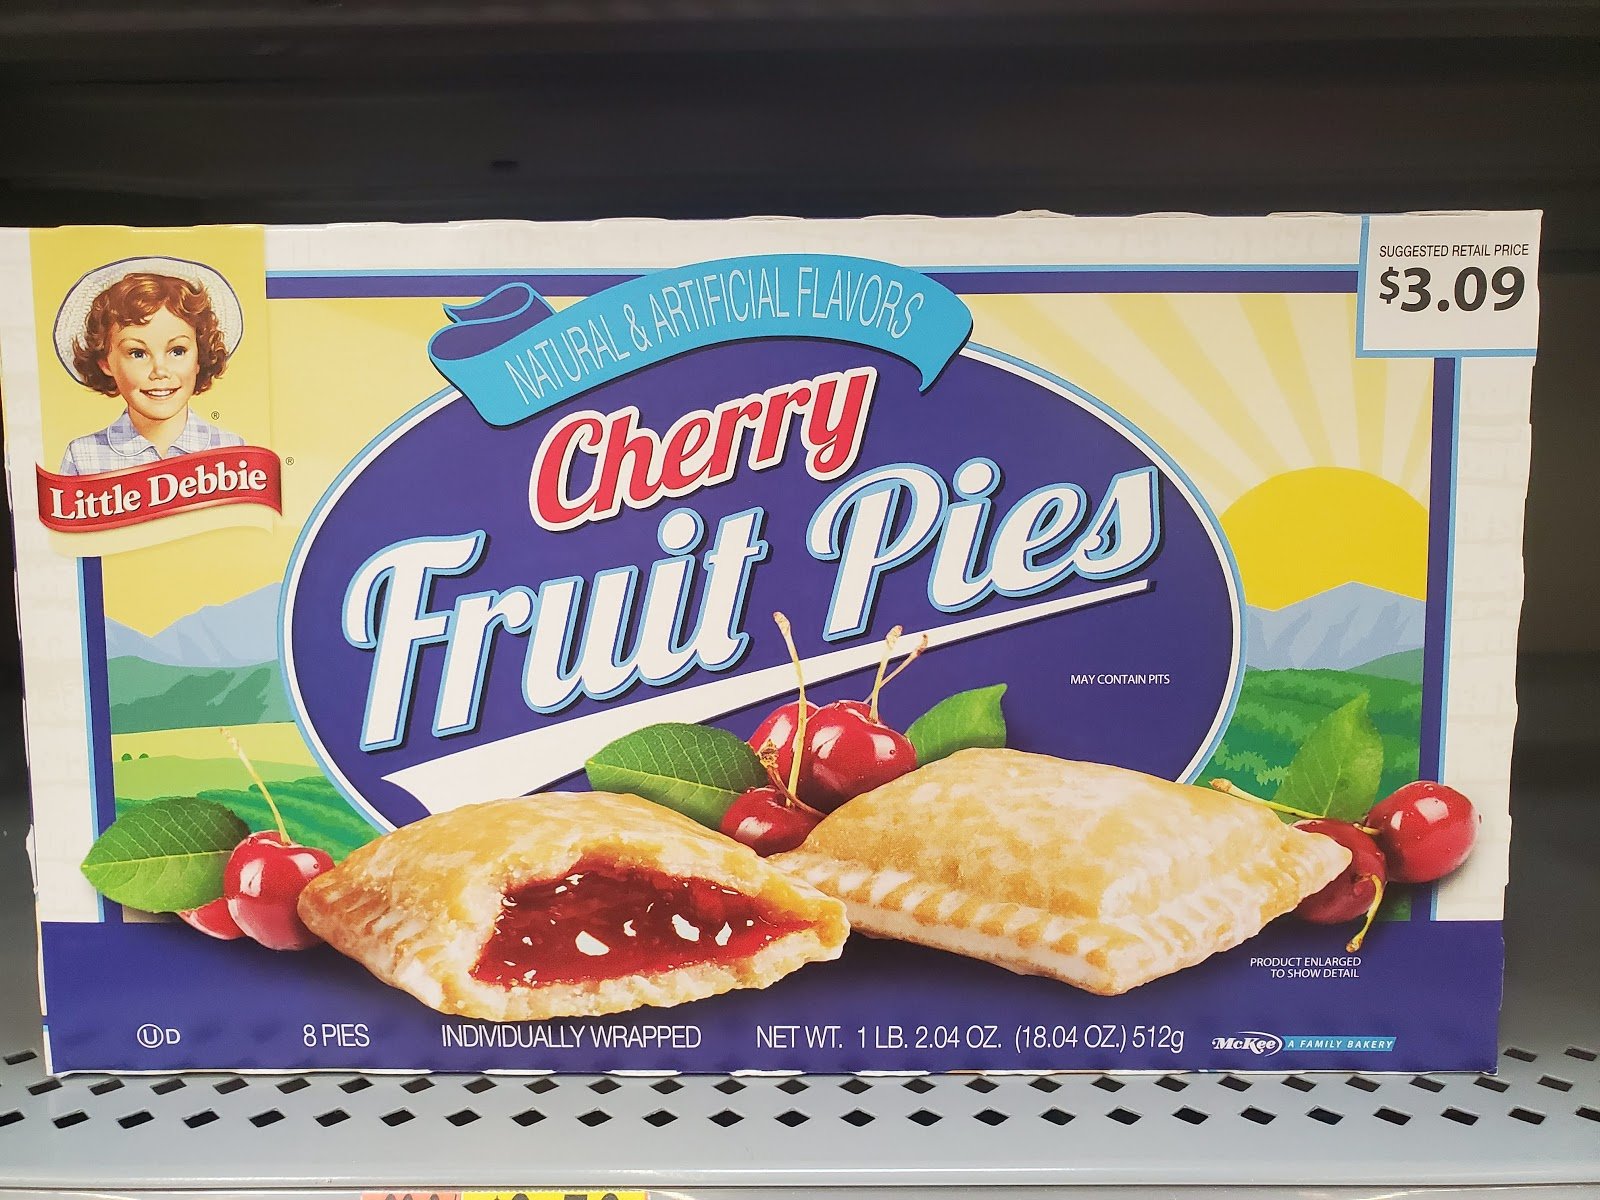 Little Debbie Cherry Pie packaging change